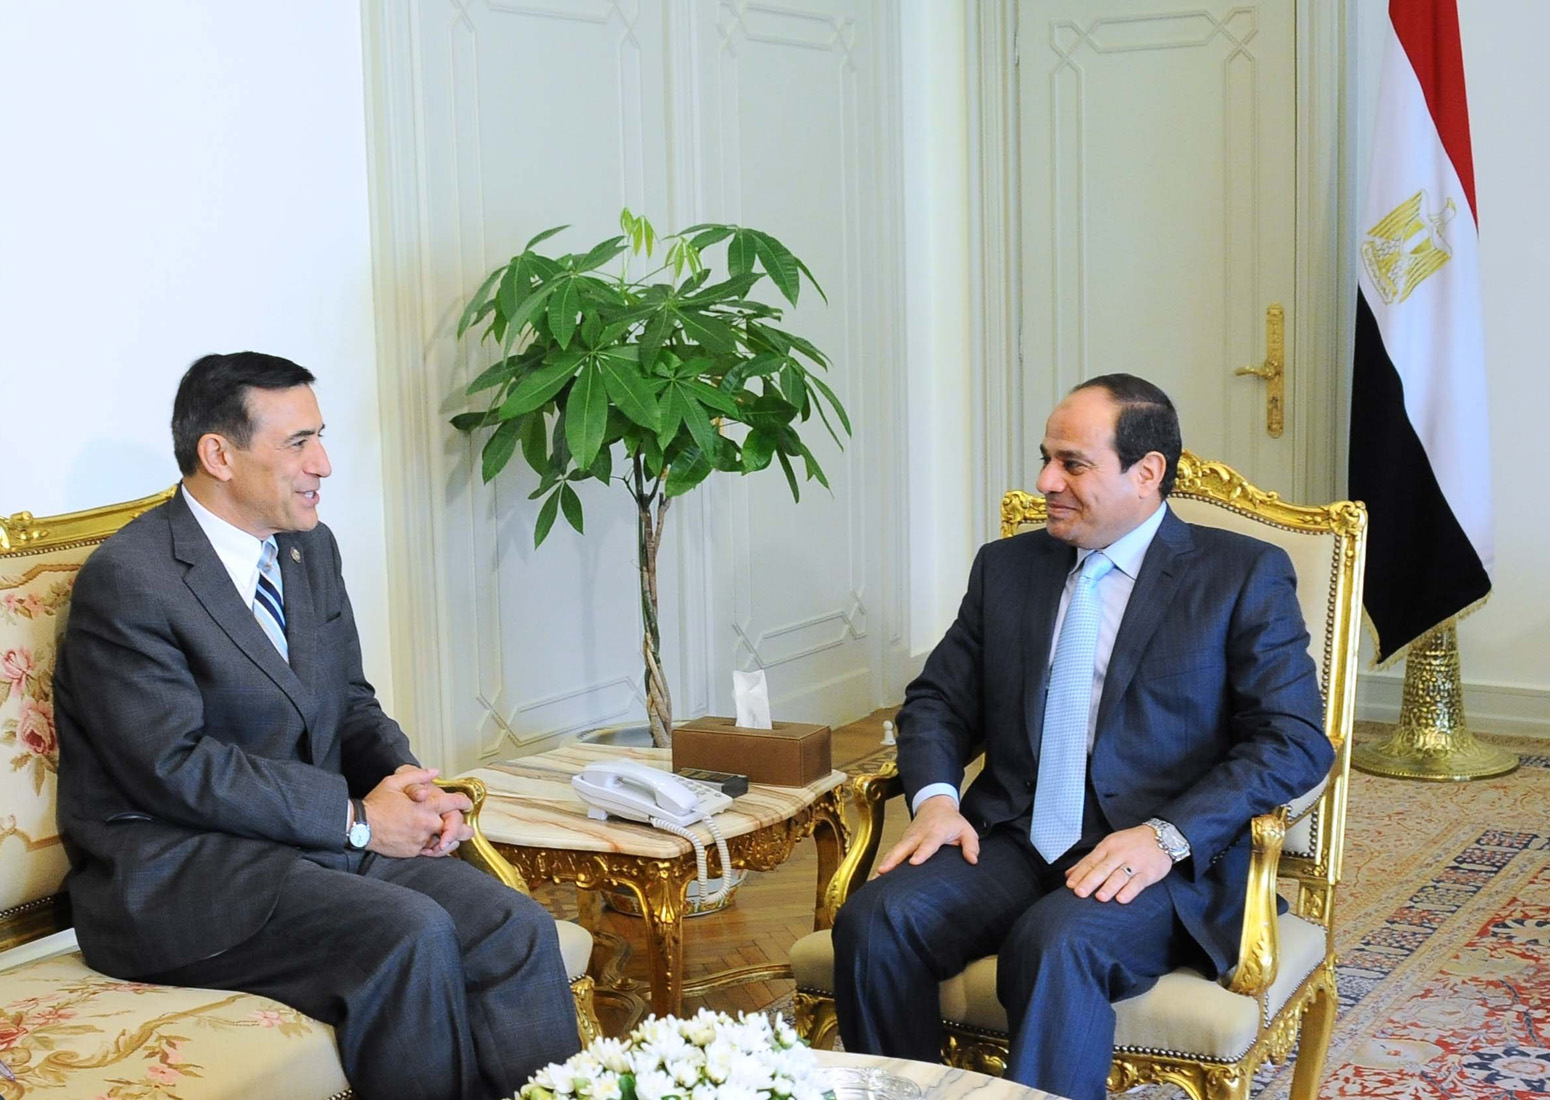 Egyptian President Abdel Fattah Al-Sisi with Congressman Darrell Issa